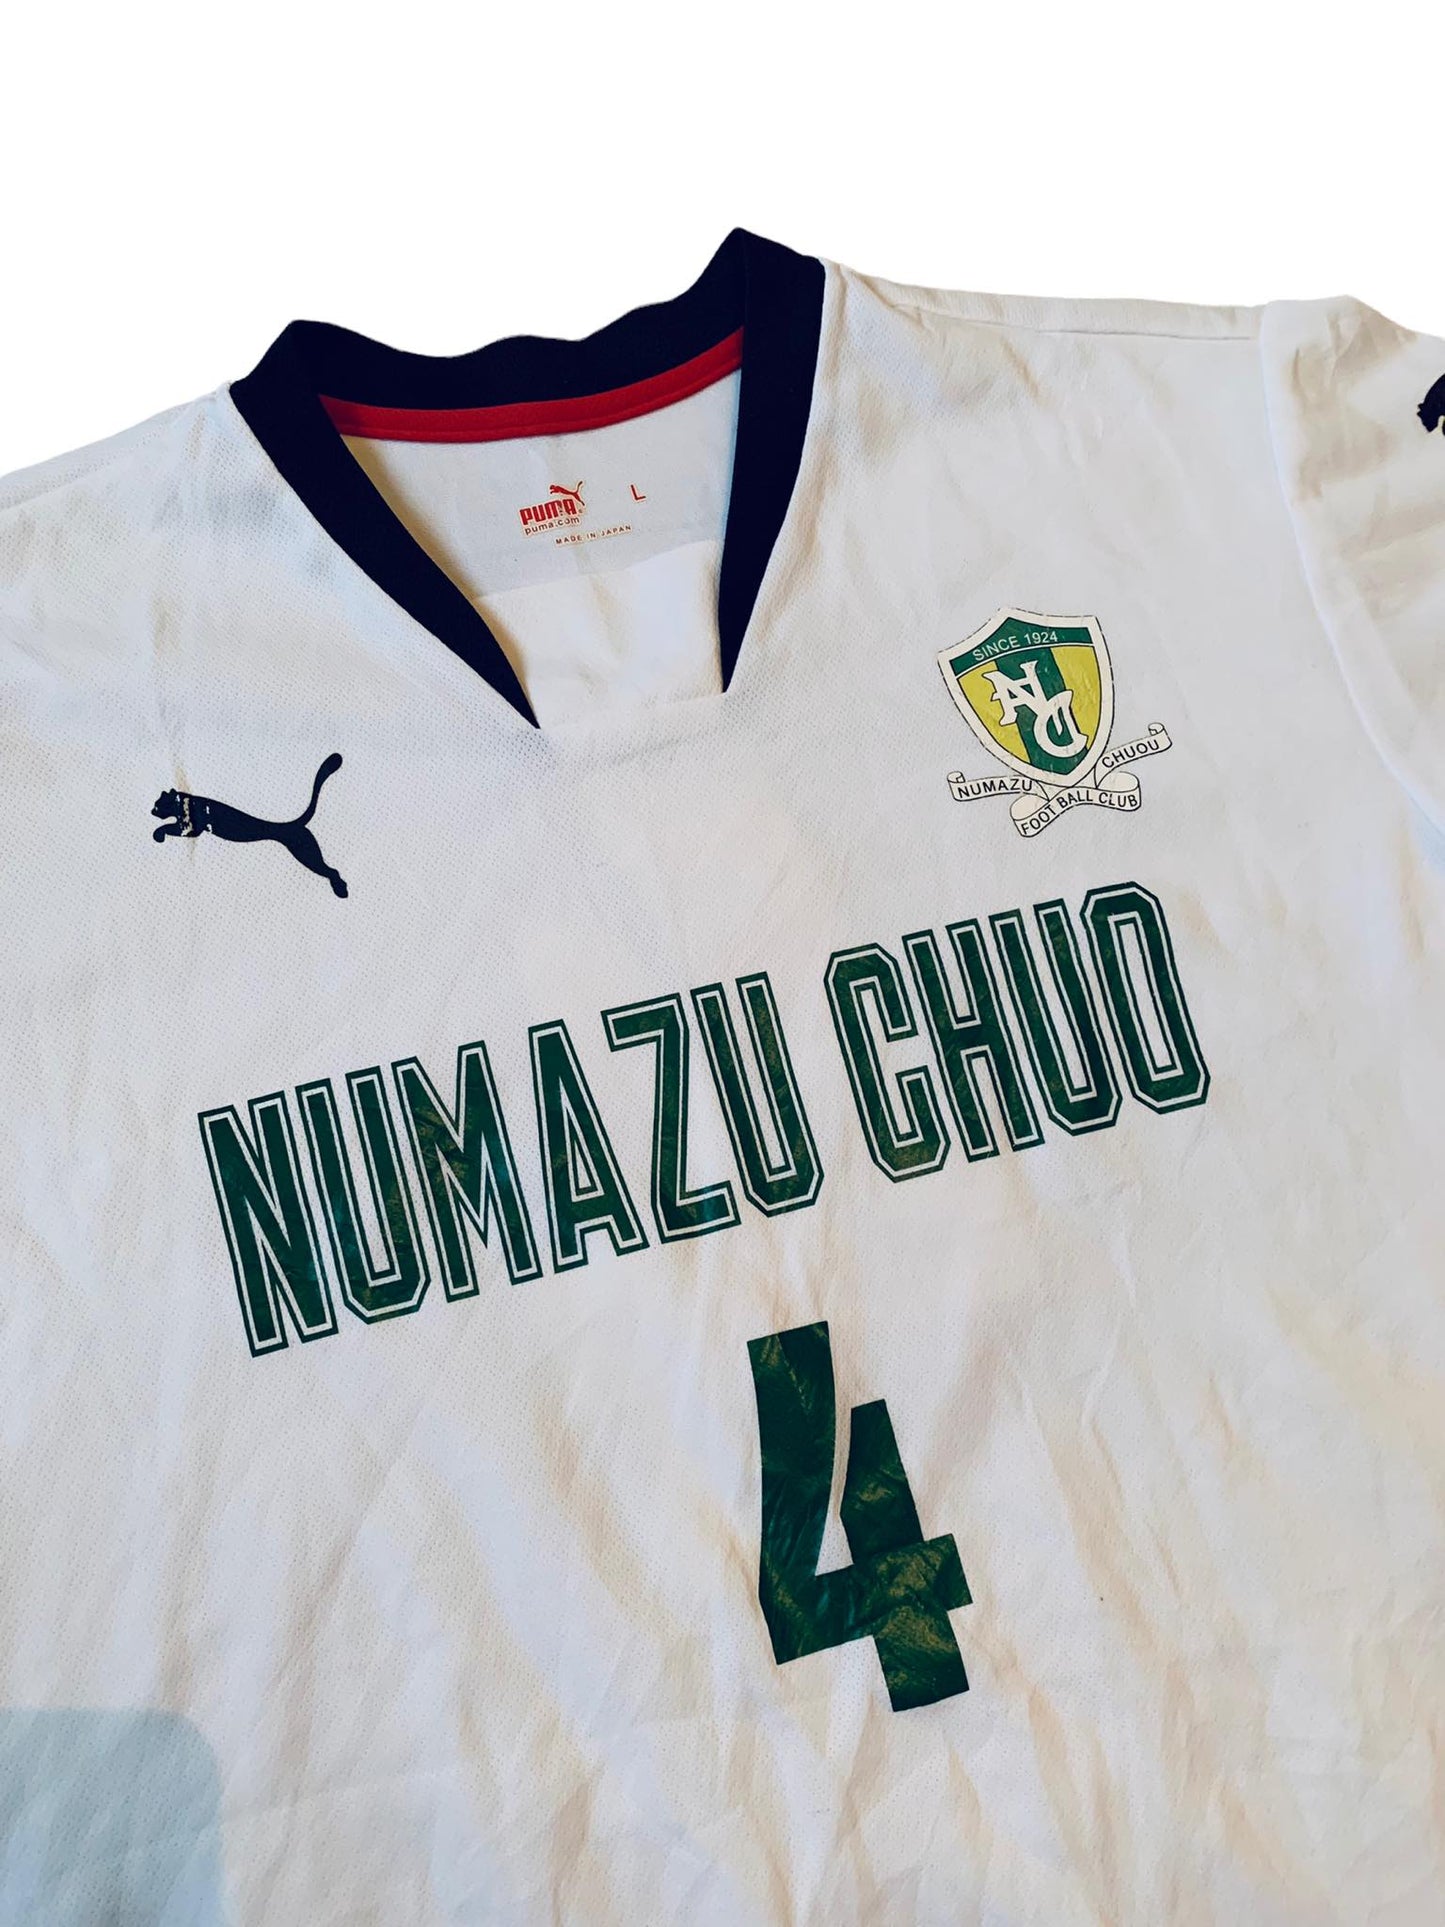 Numazu Chou F.C Shirt - #4 (L)